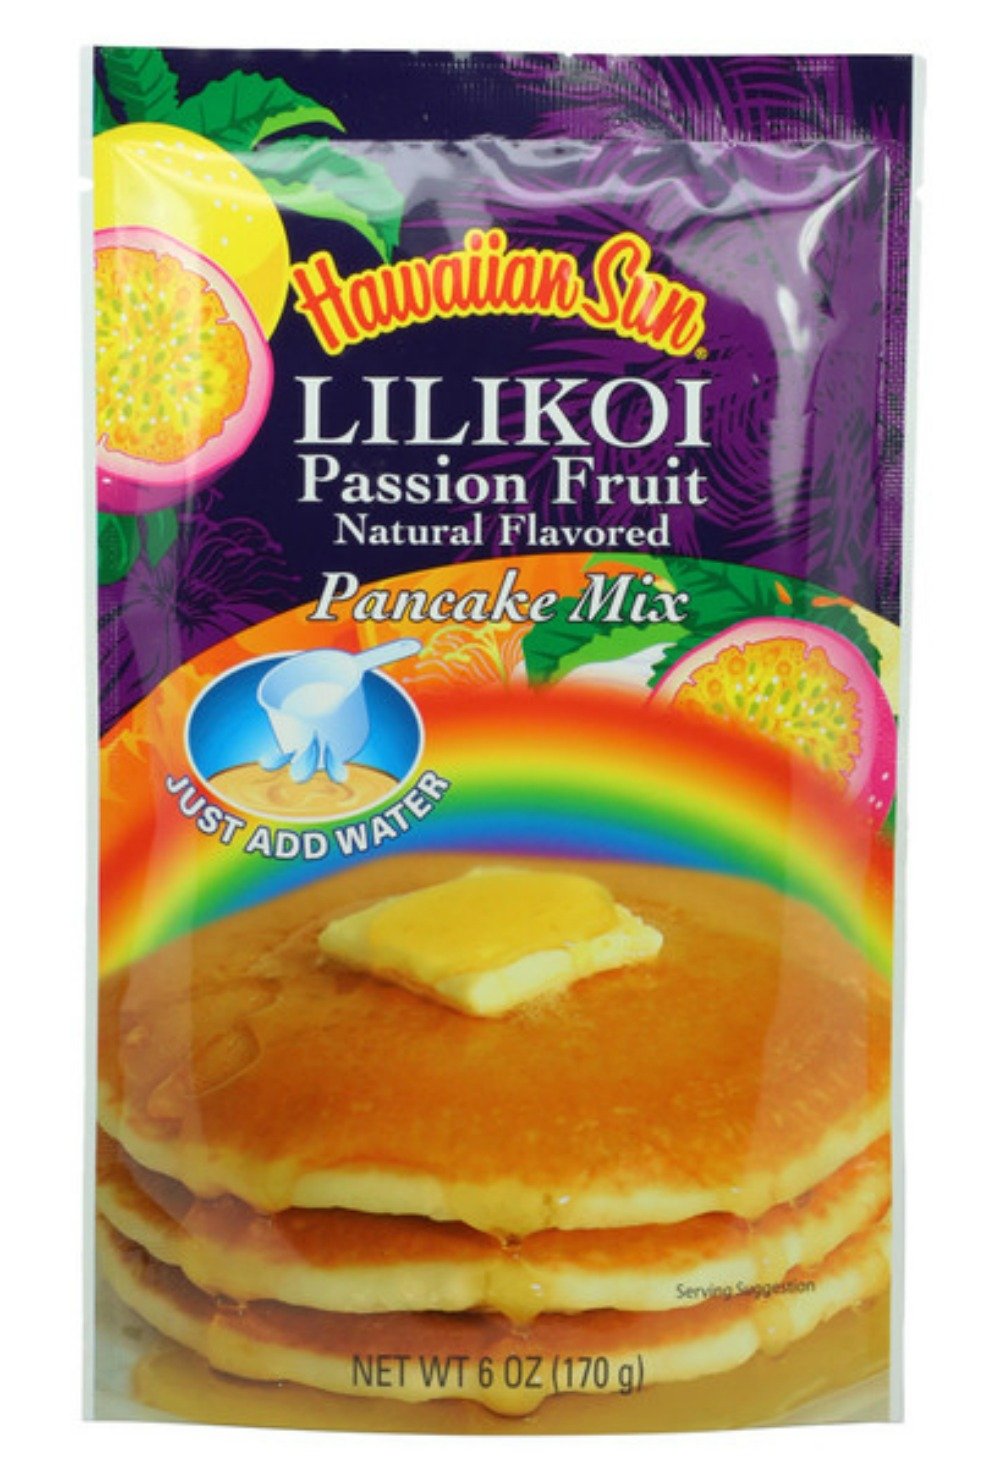 Hawaiian Sun 5 Pack Assorted Pancake Mix: Chocolate Mac, Passion Fruit, Banana Mac Nut, Coconut Pineapple, Strawberry Guava